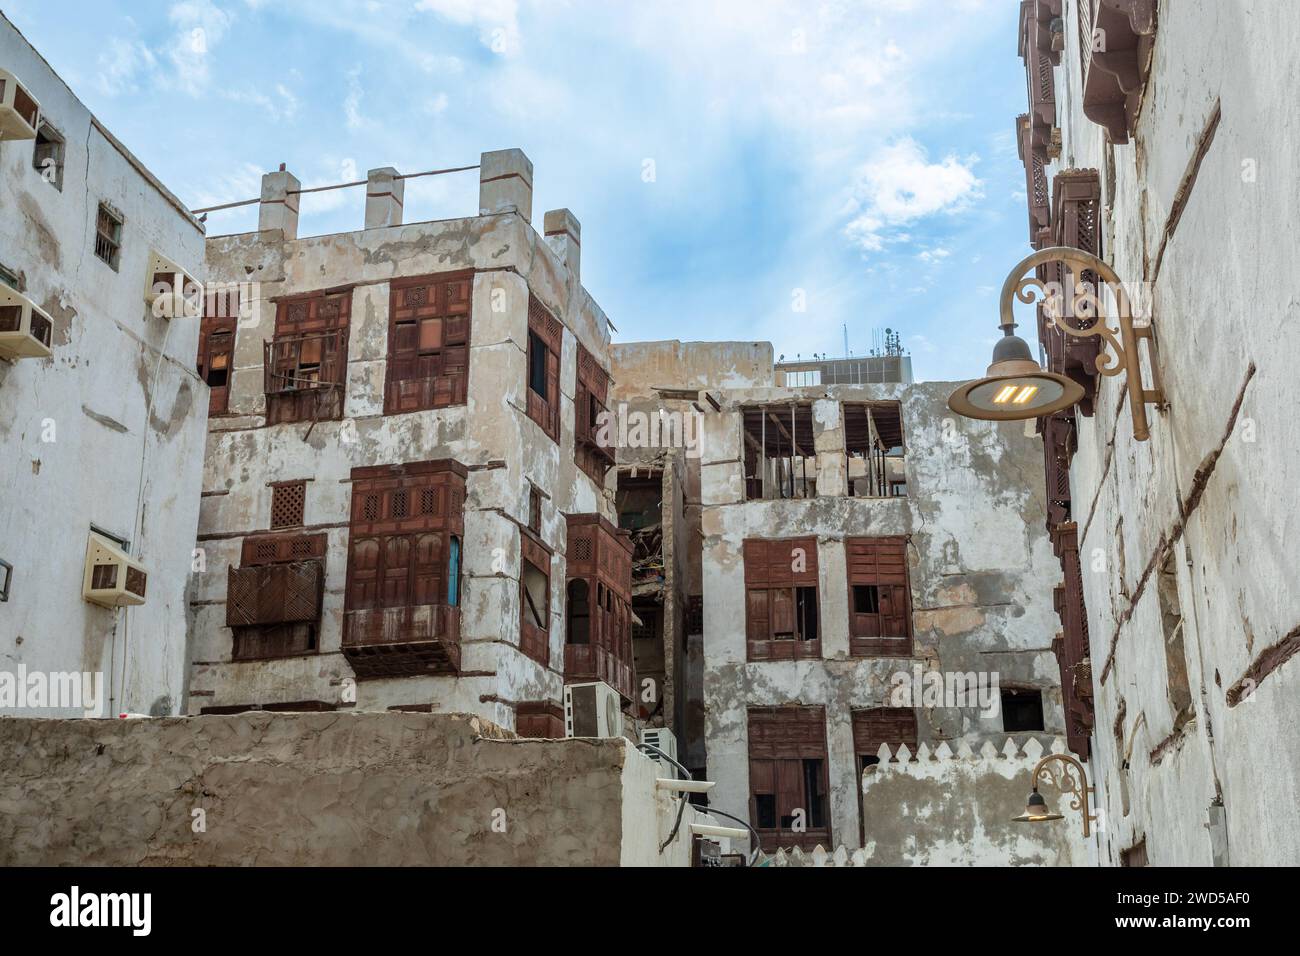 Al-Balad old town with abandoned muslim houses, Jeddah, Saudi Arabia Stock Photo